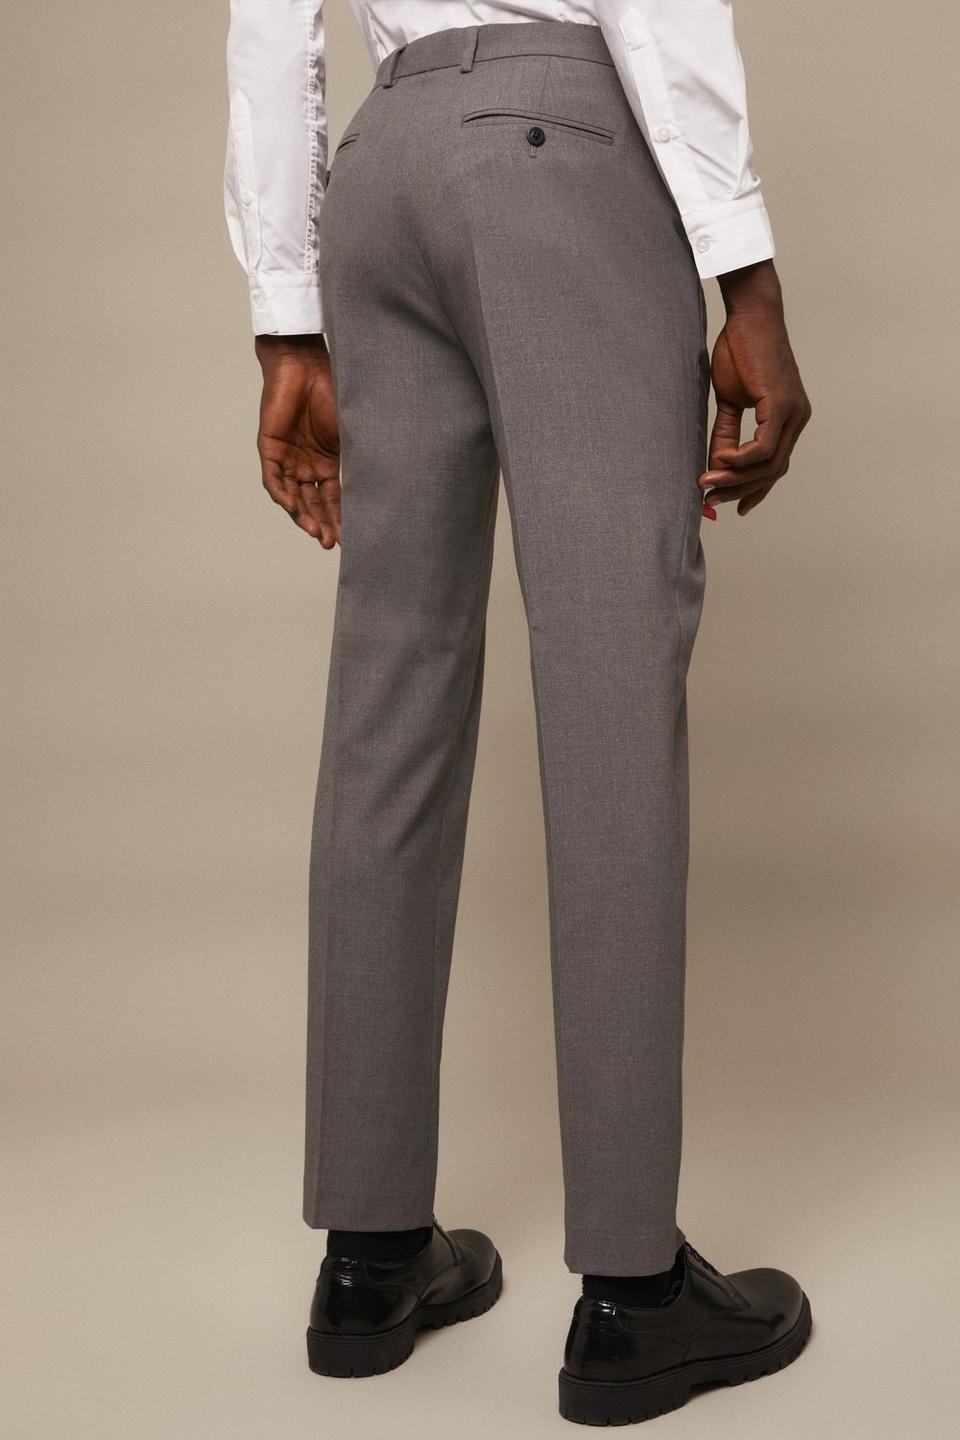 Suits | Tailored Fit Light Grey Essential Suit Trousers | Burton